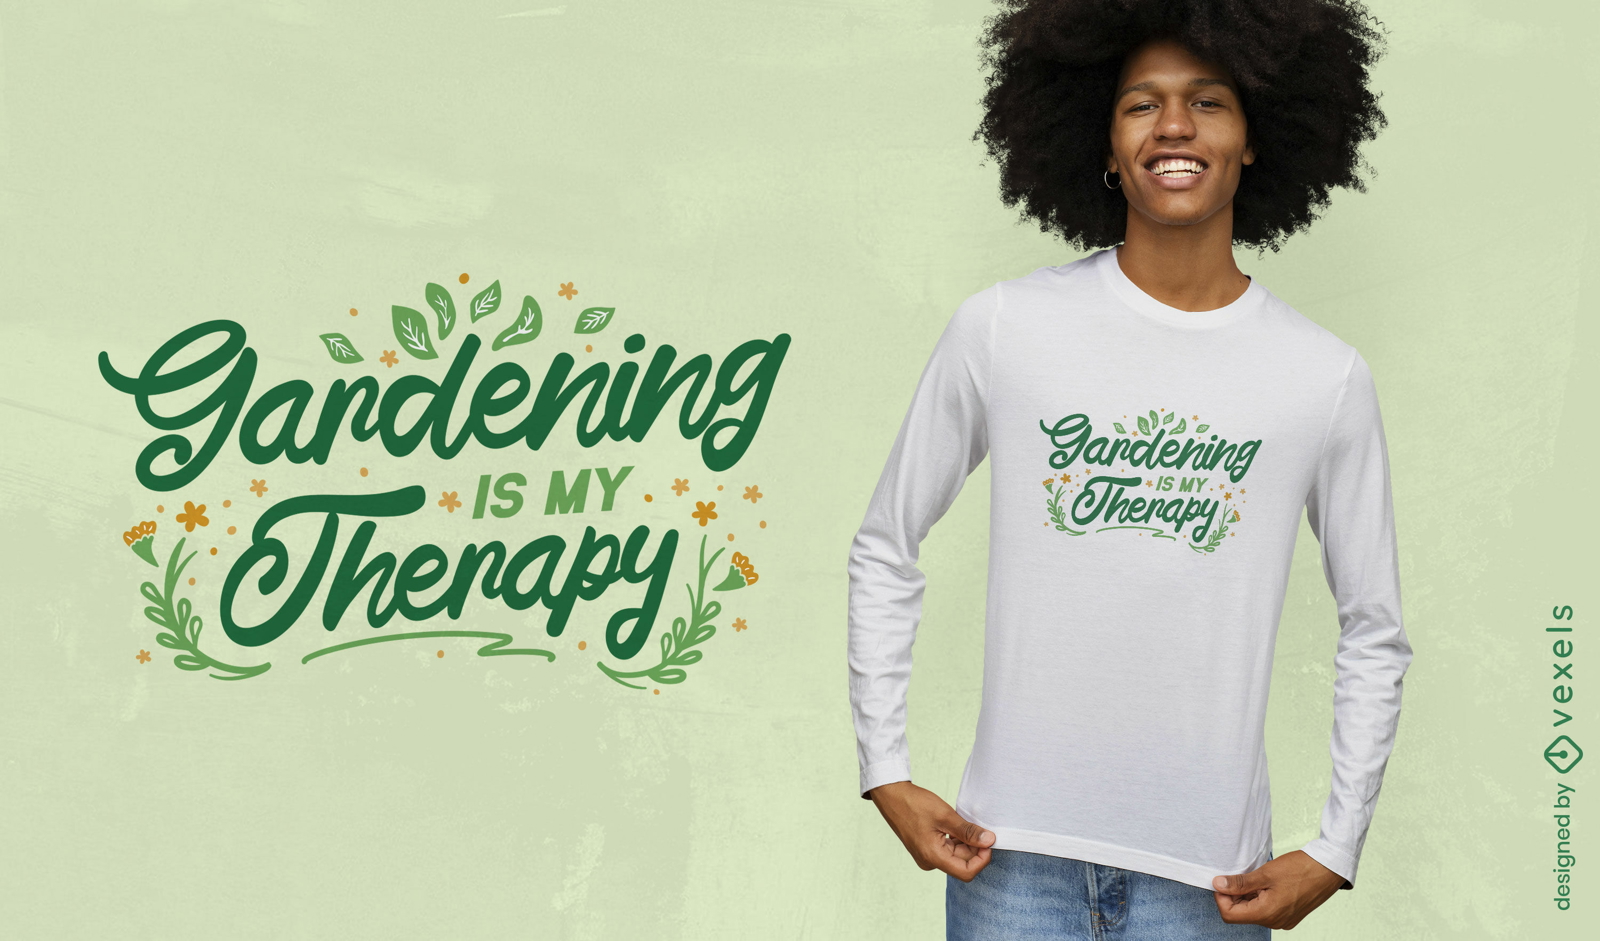 Dise?o de camiseta de cita de terapia de jardiner?a.